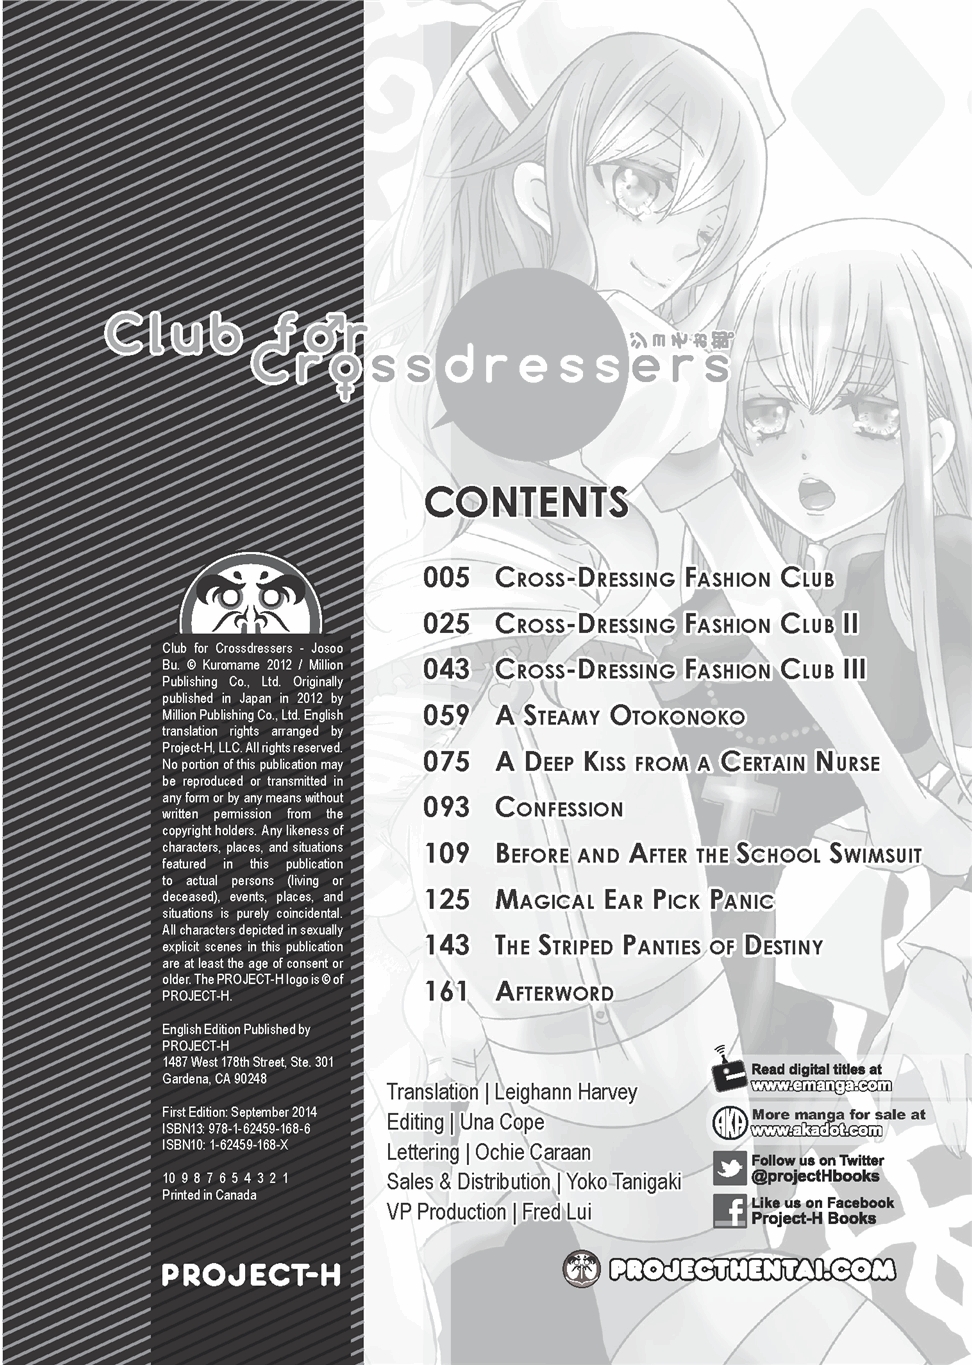 [Kuromame] Club for Crossdressers [English] 160